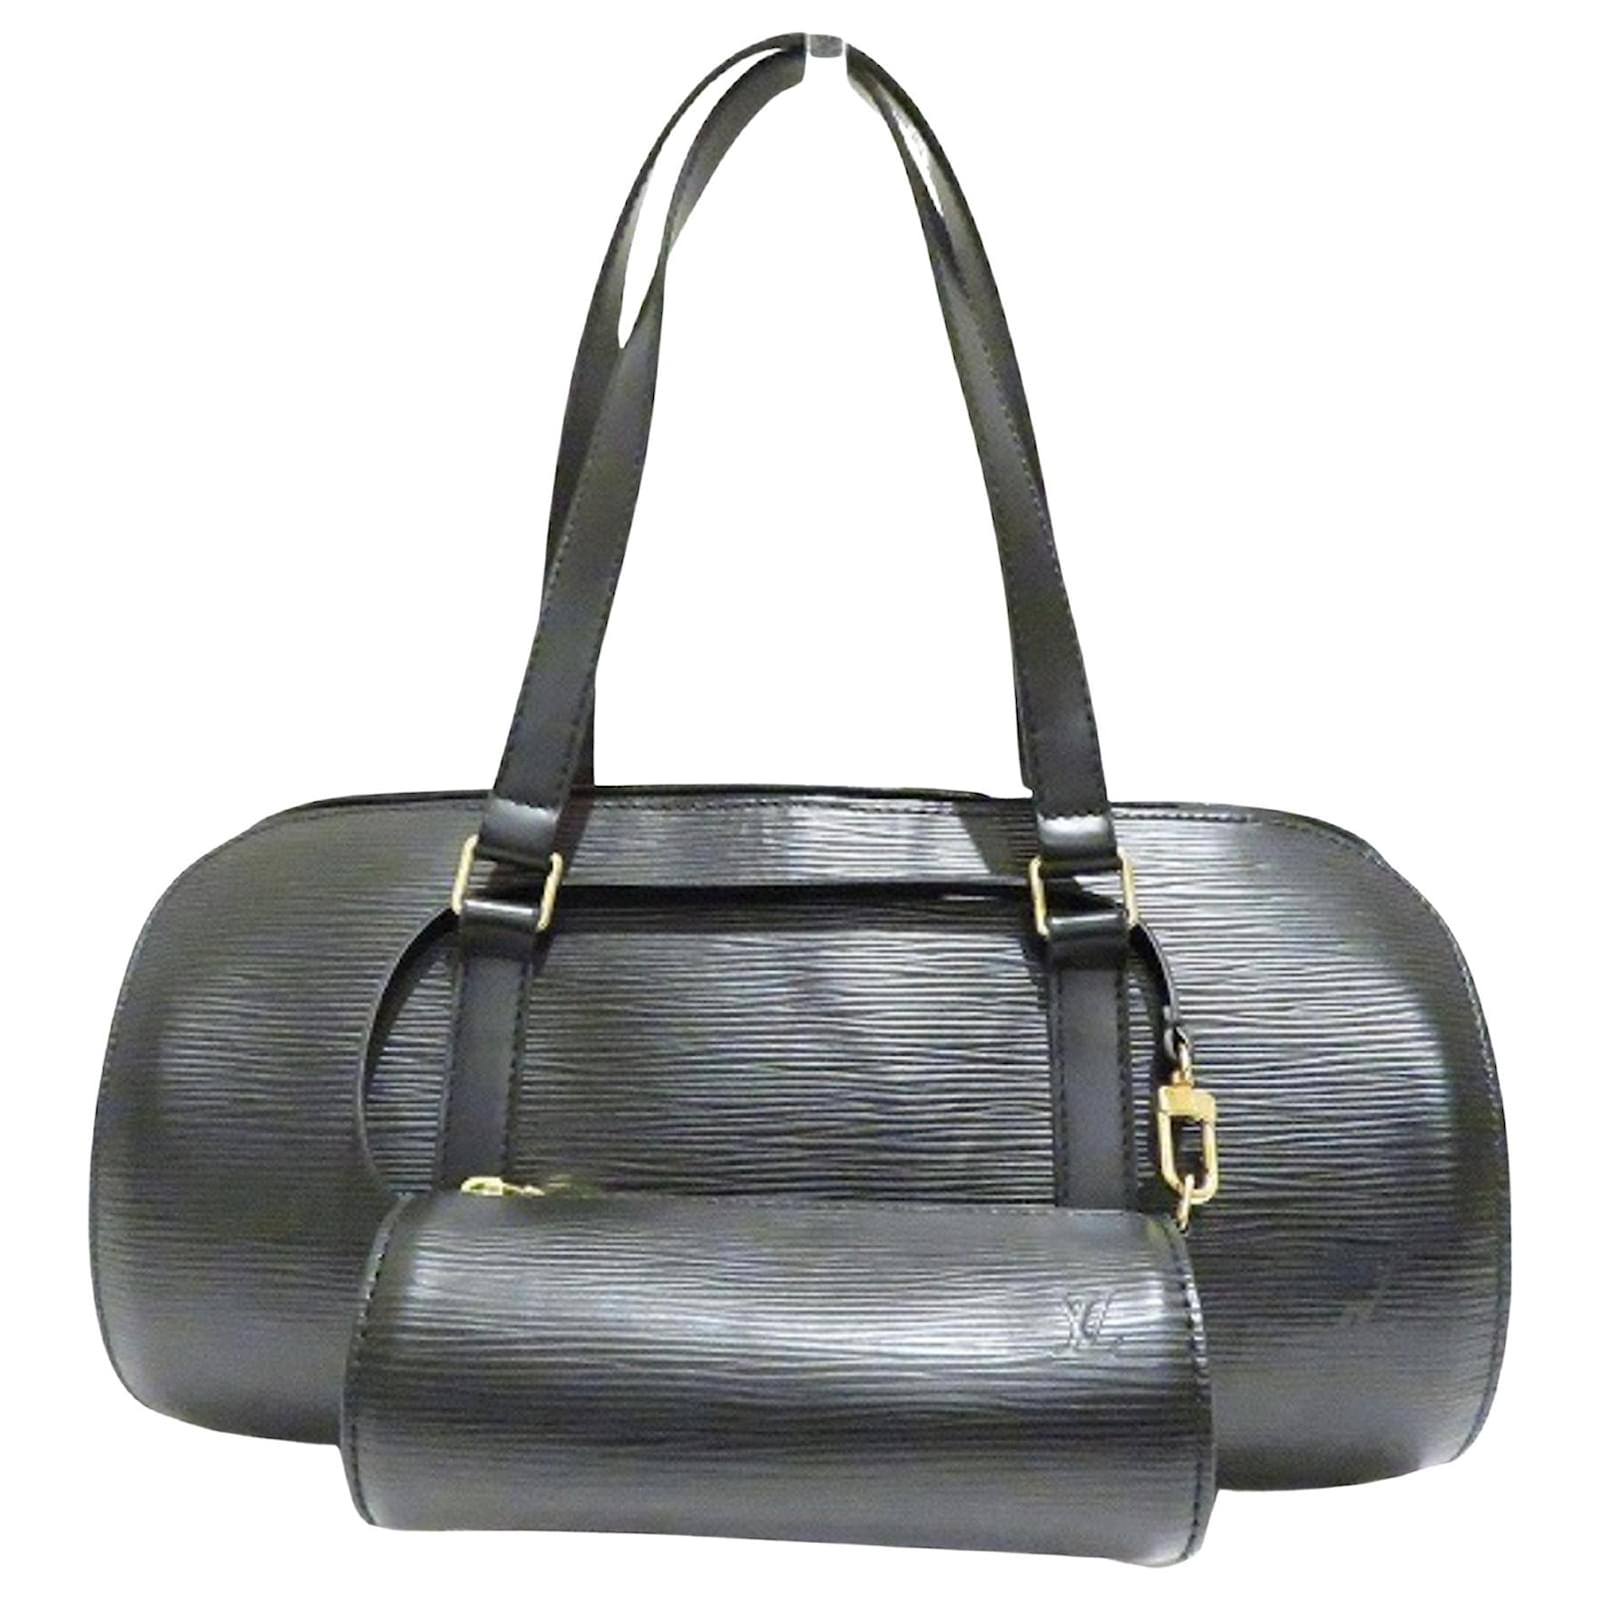 Louis Vuitton Soufflot handbag in black epi leather